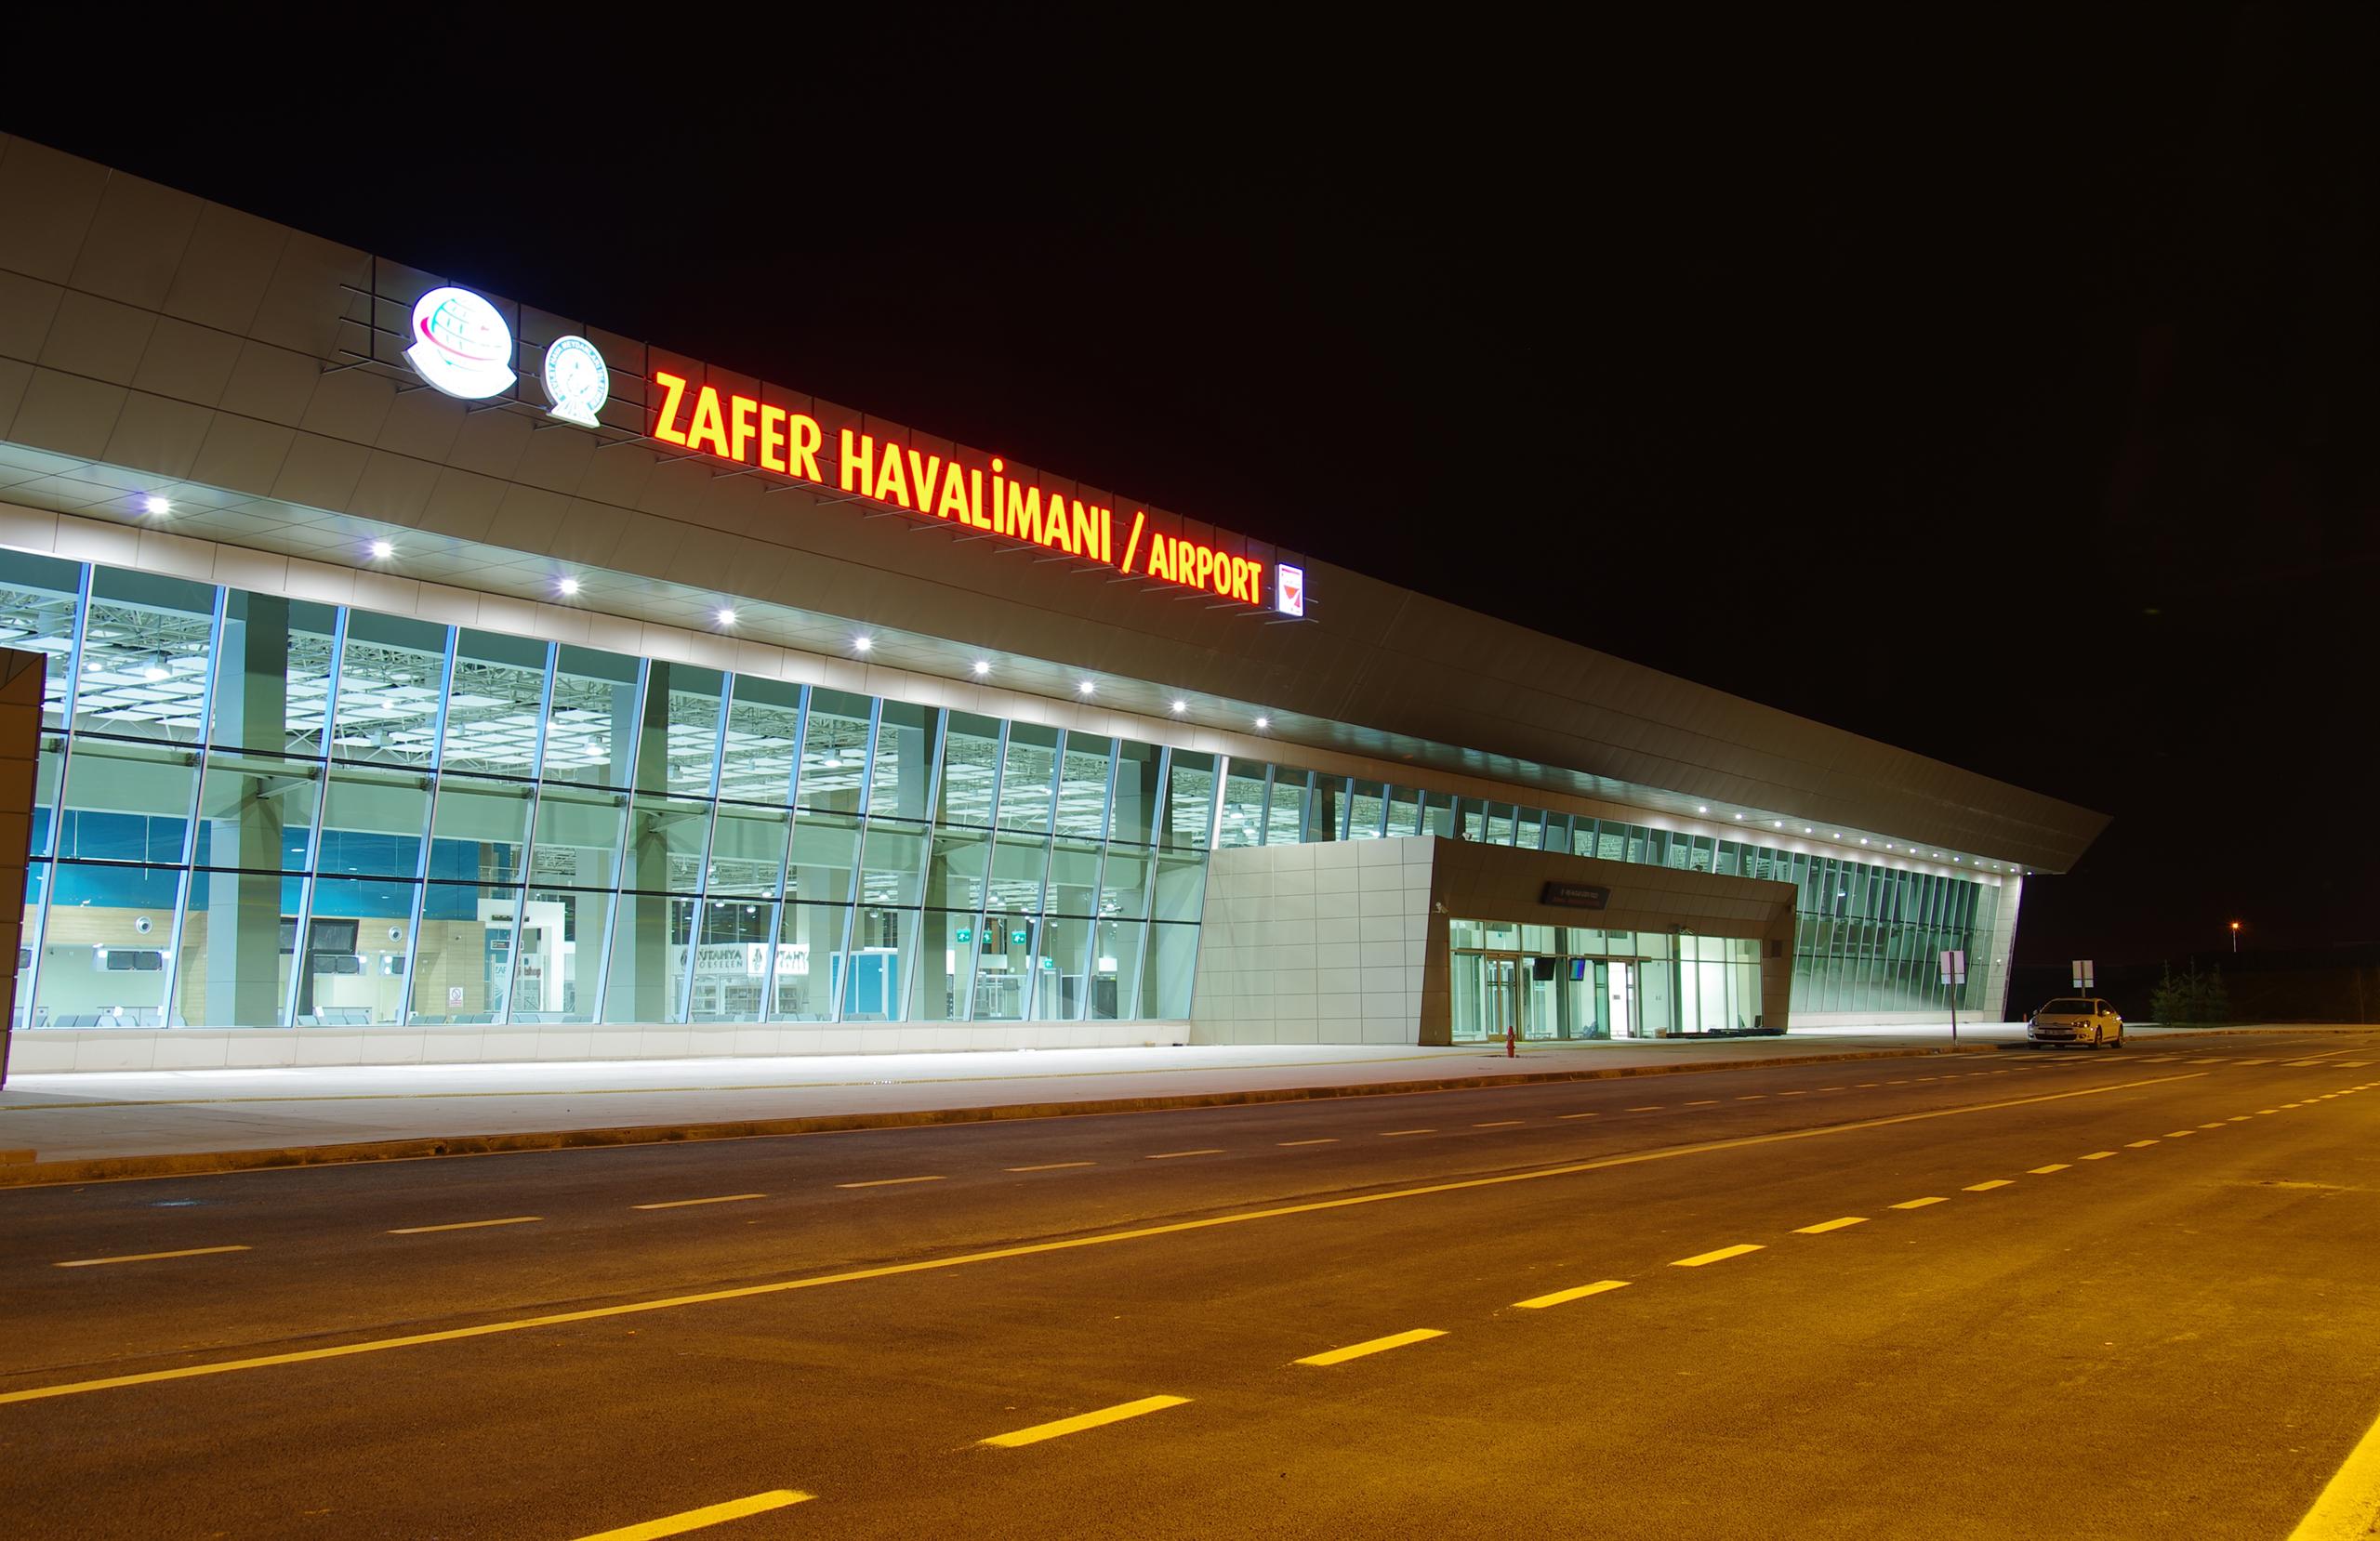 External view of airport terminal building